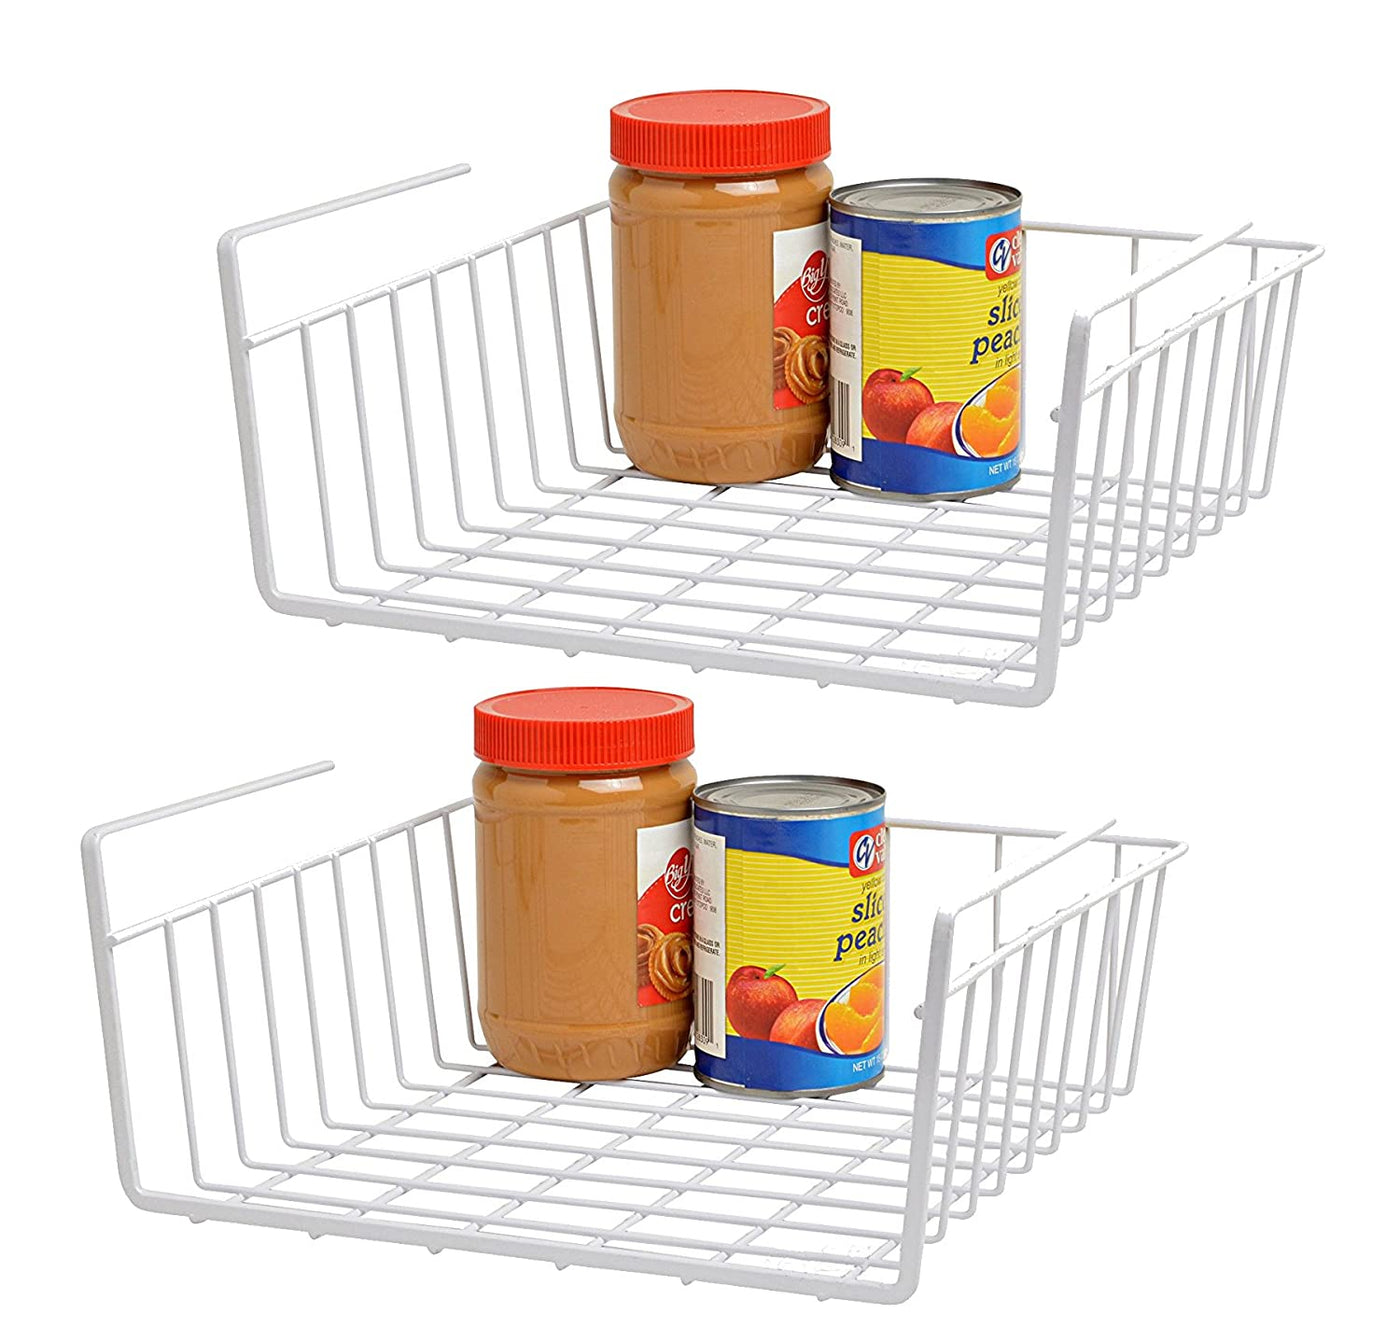 Under Shelf Basket Wire Rack Easily Slides Under Shelves for Extra Cabinet Storage - White